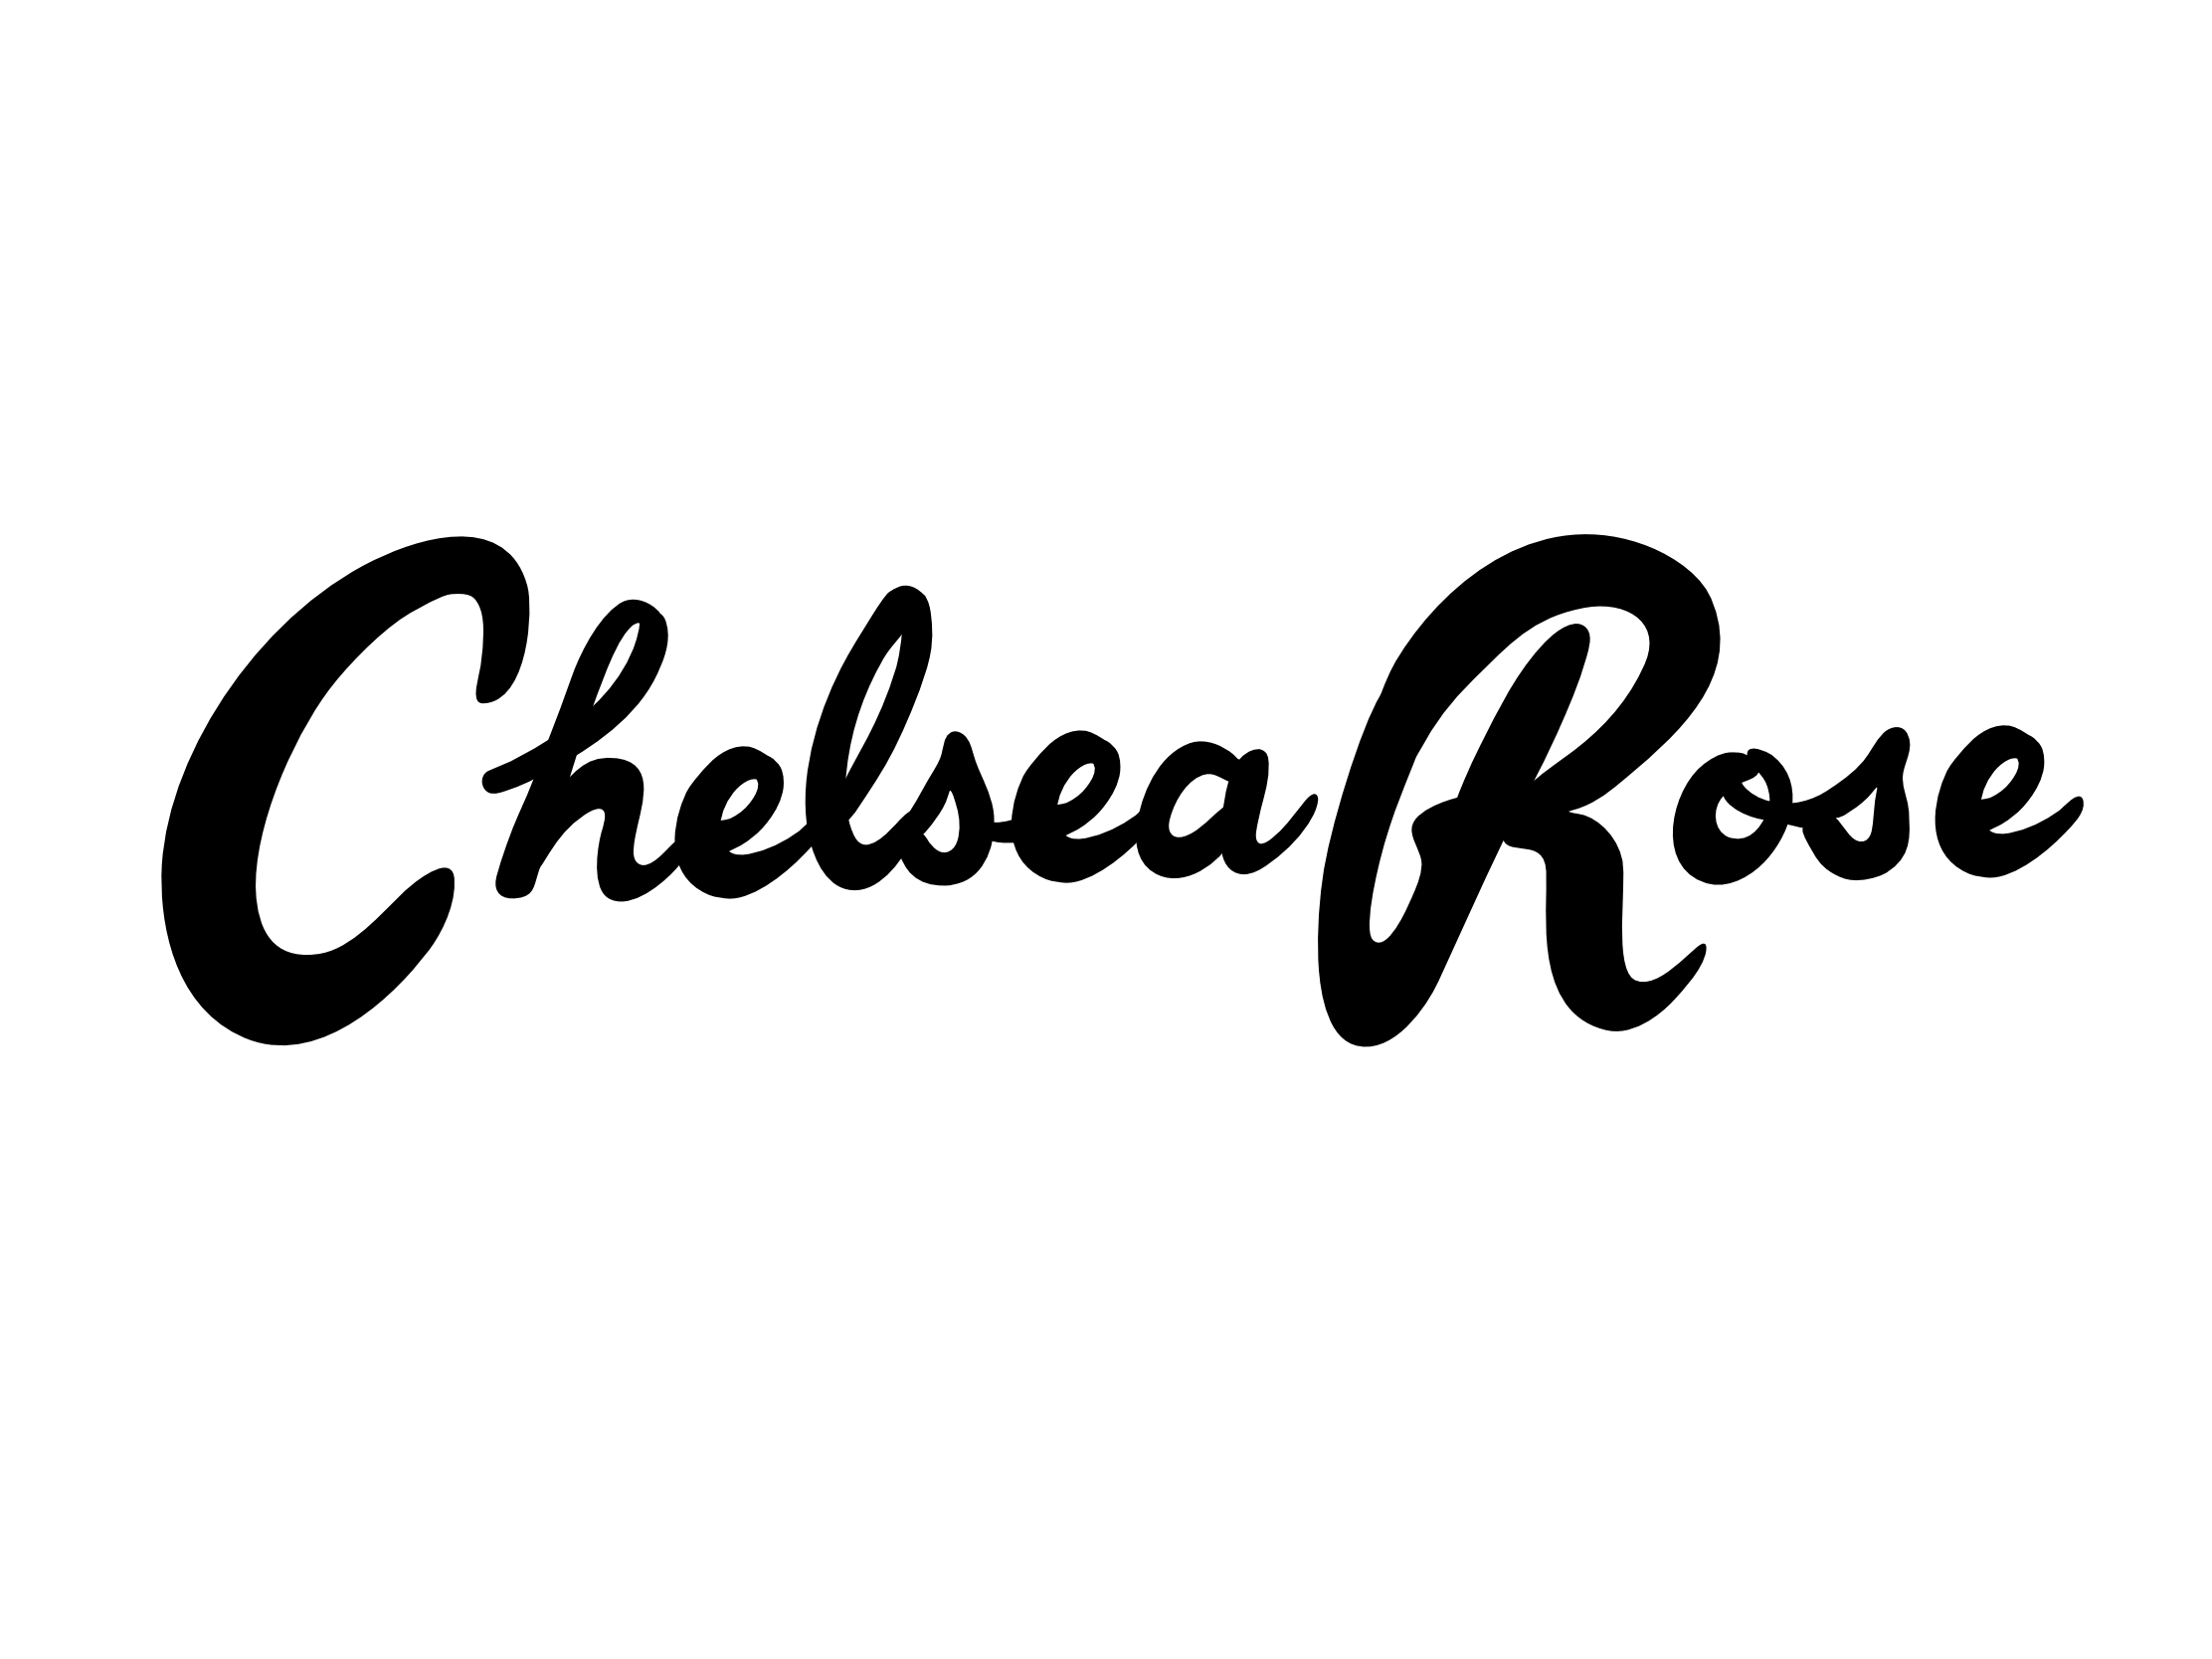 Chelsea Rose